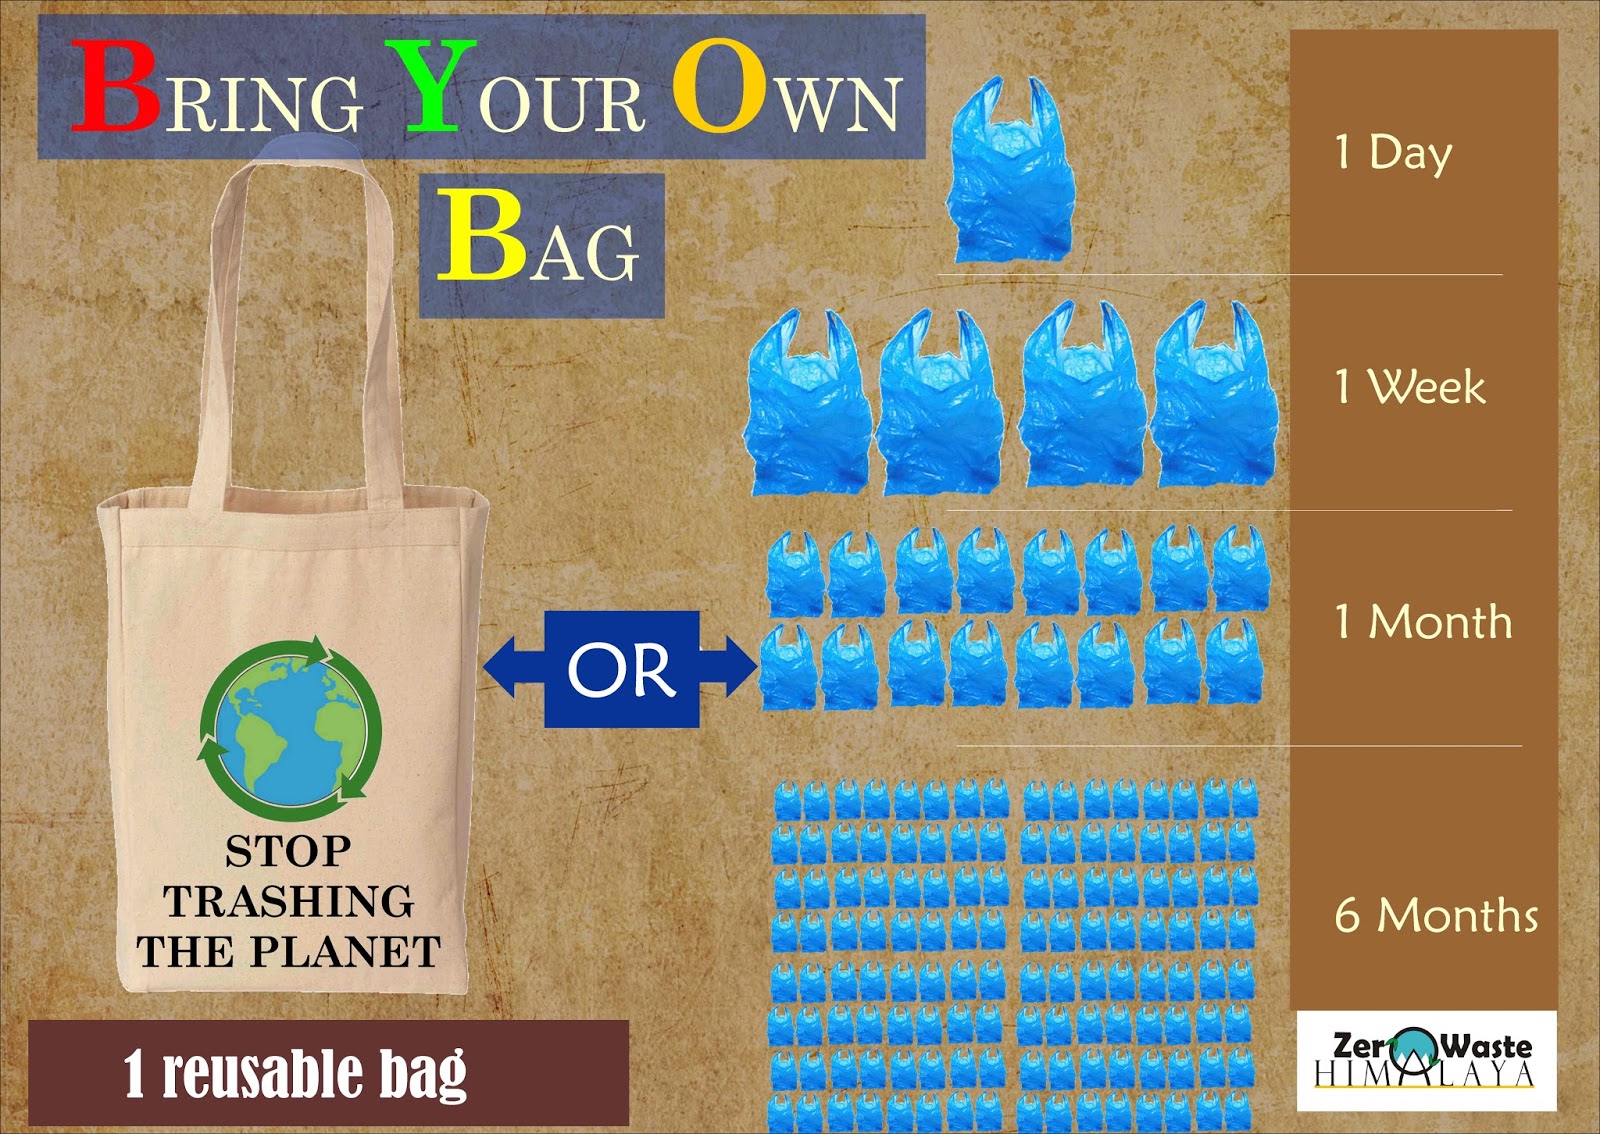 darjeelingprerna: International Plastic Bag Free Day 3 July 2016